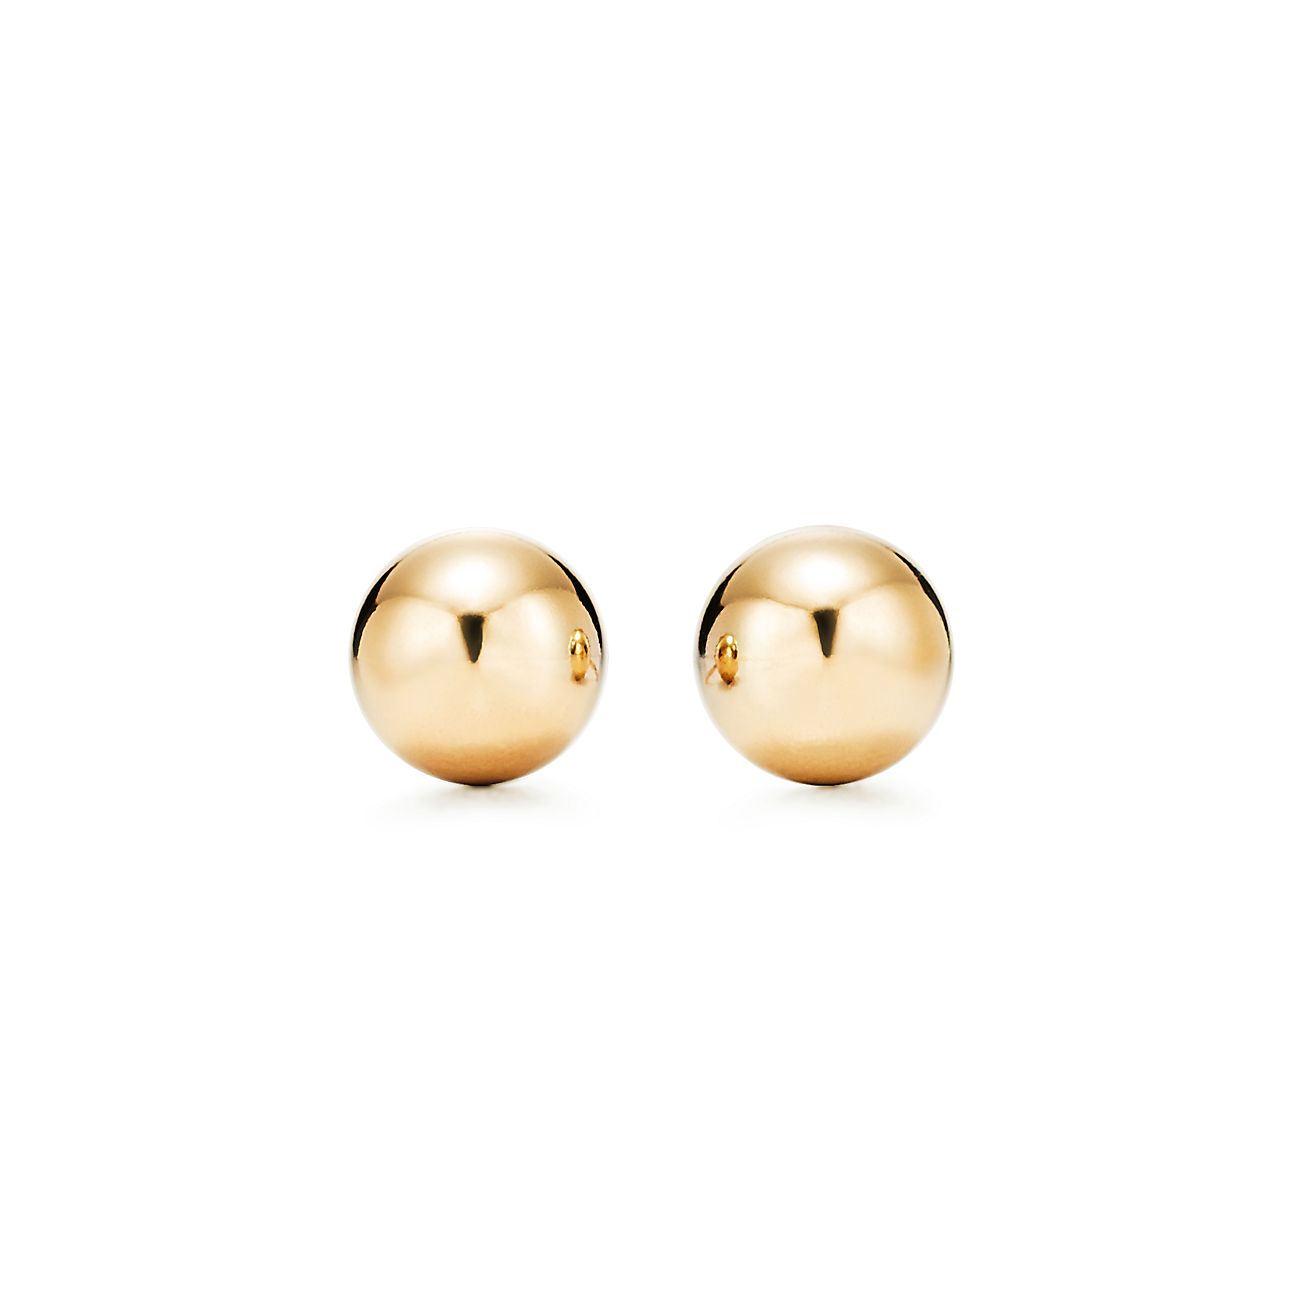 ball earrings tiffany